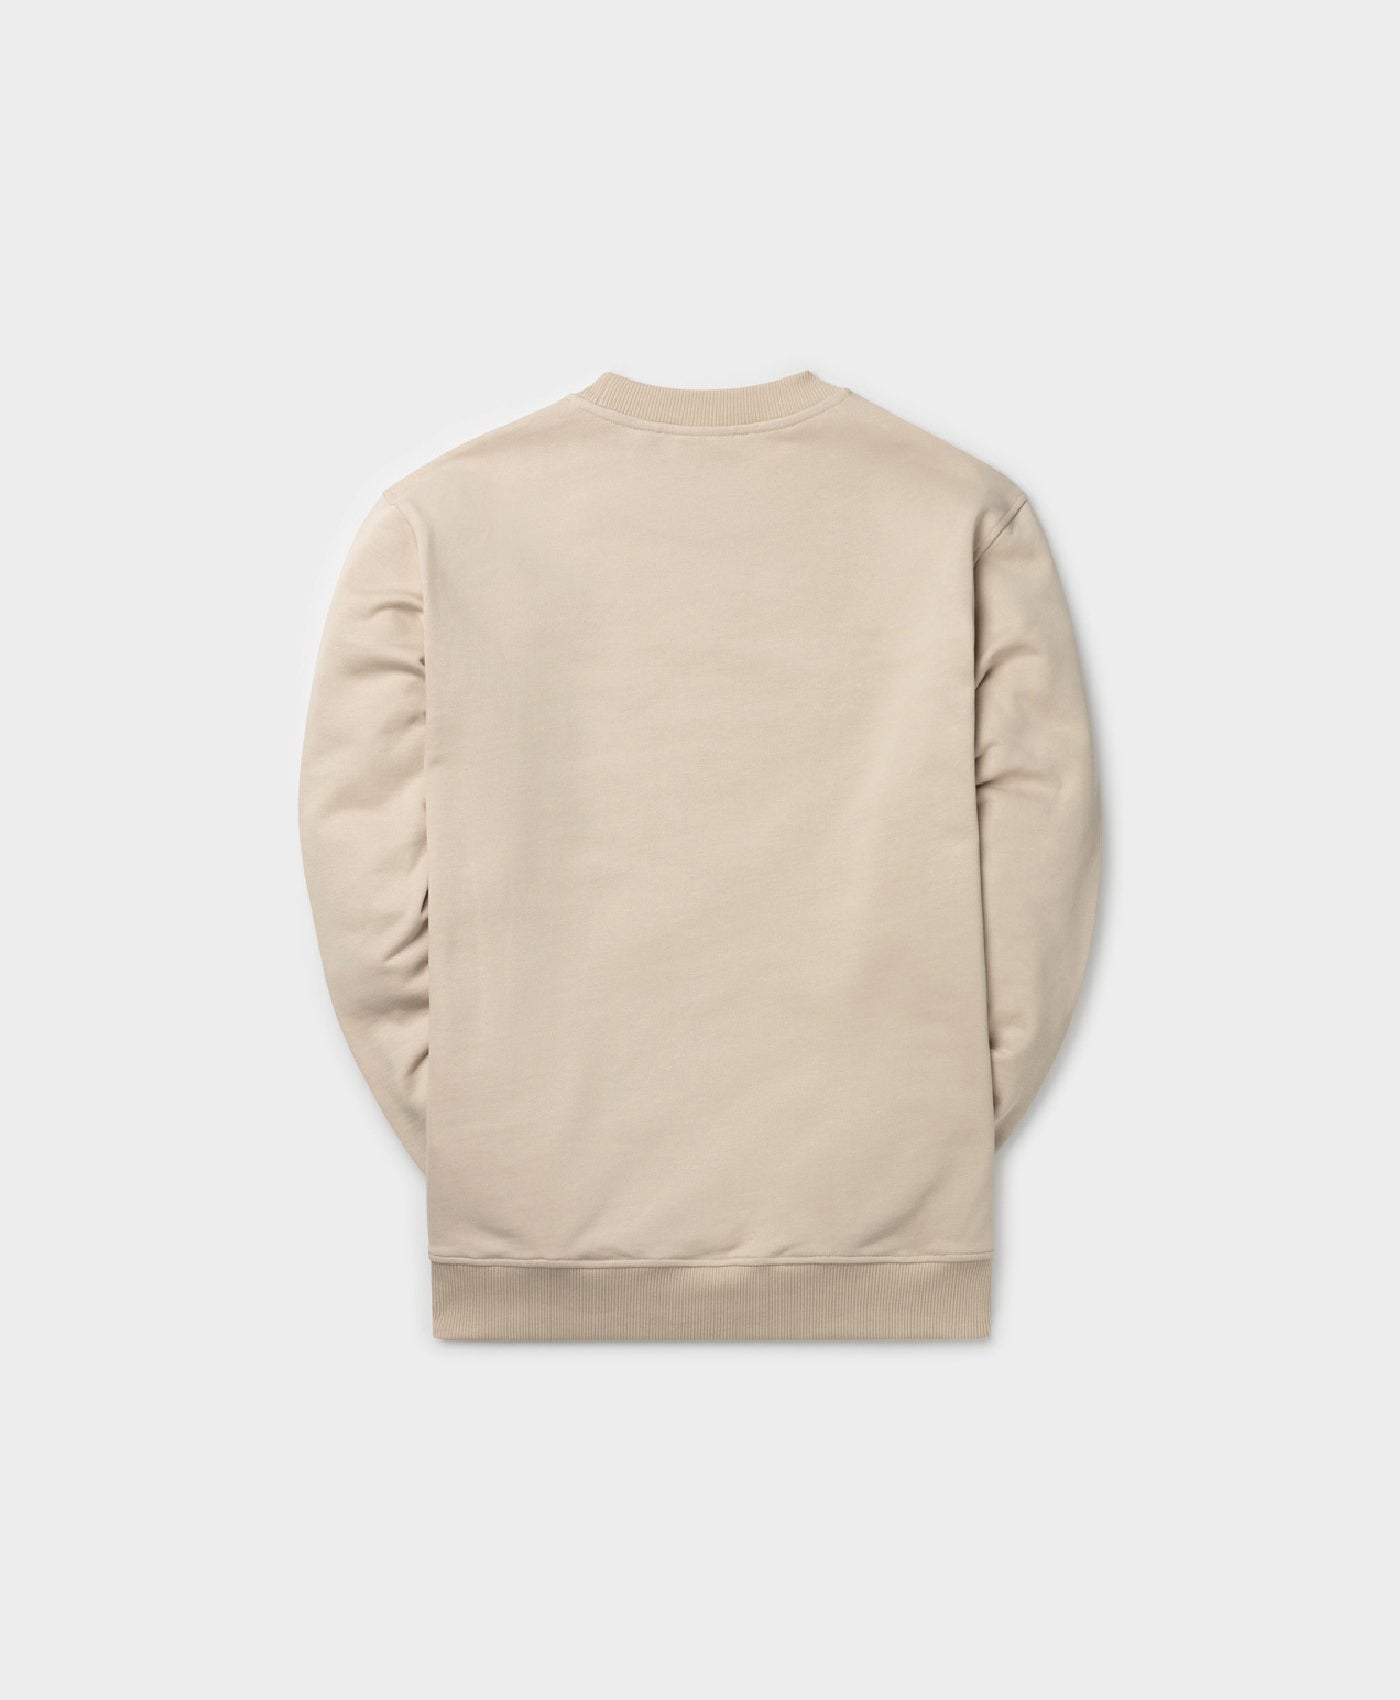 DP - Beige Muti Sweater - Packshot - Rear